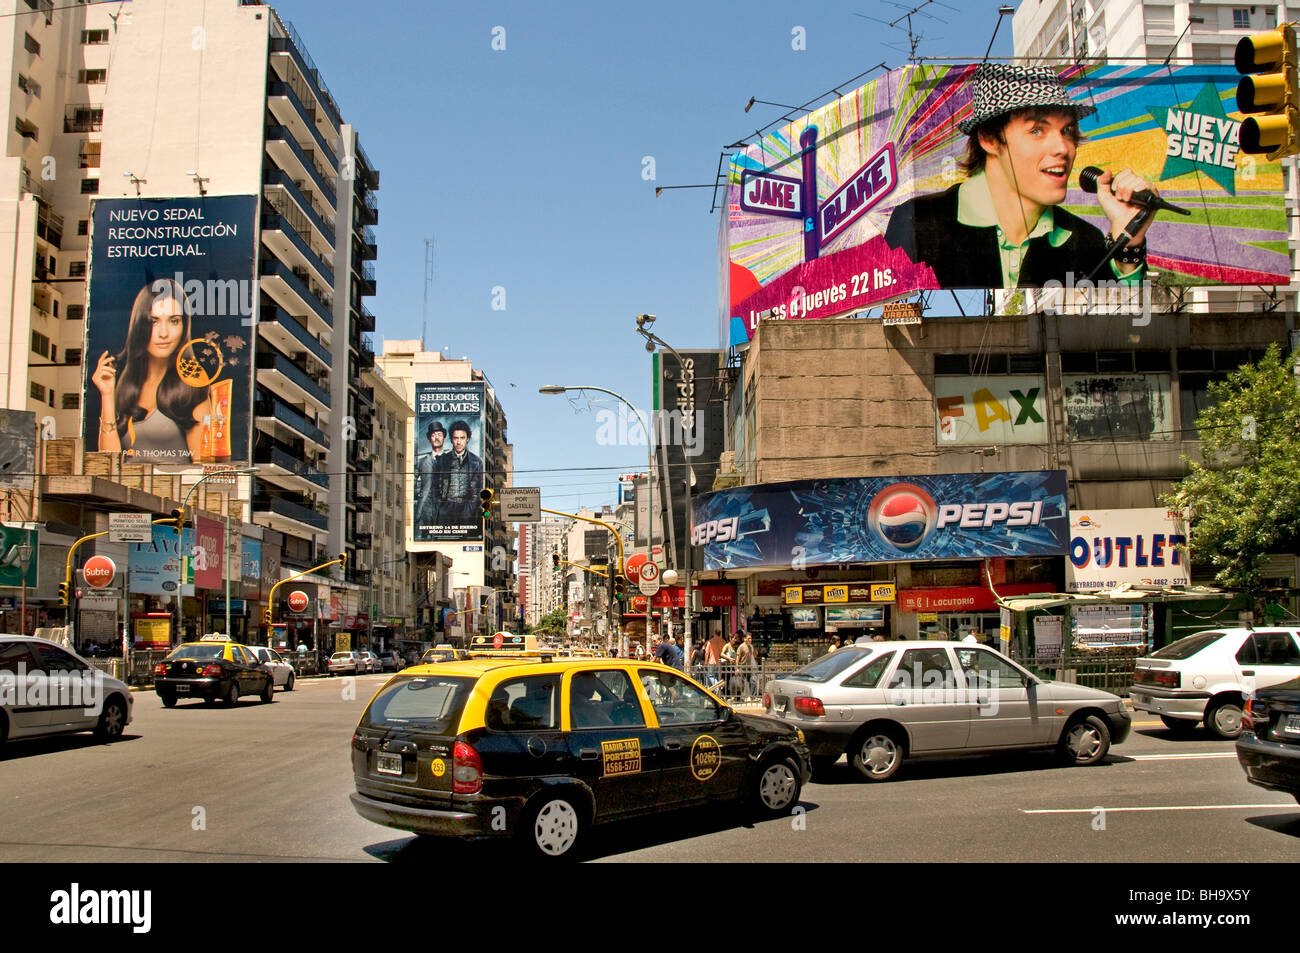 Avenida Corrientes Pueyrredon Buenos Aires Argentina Stock Photo